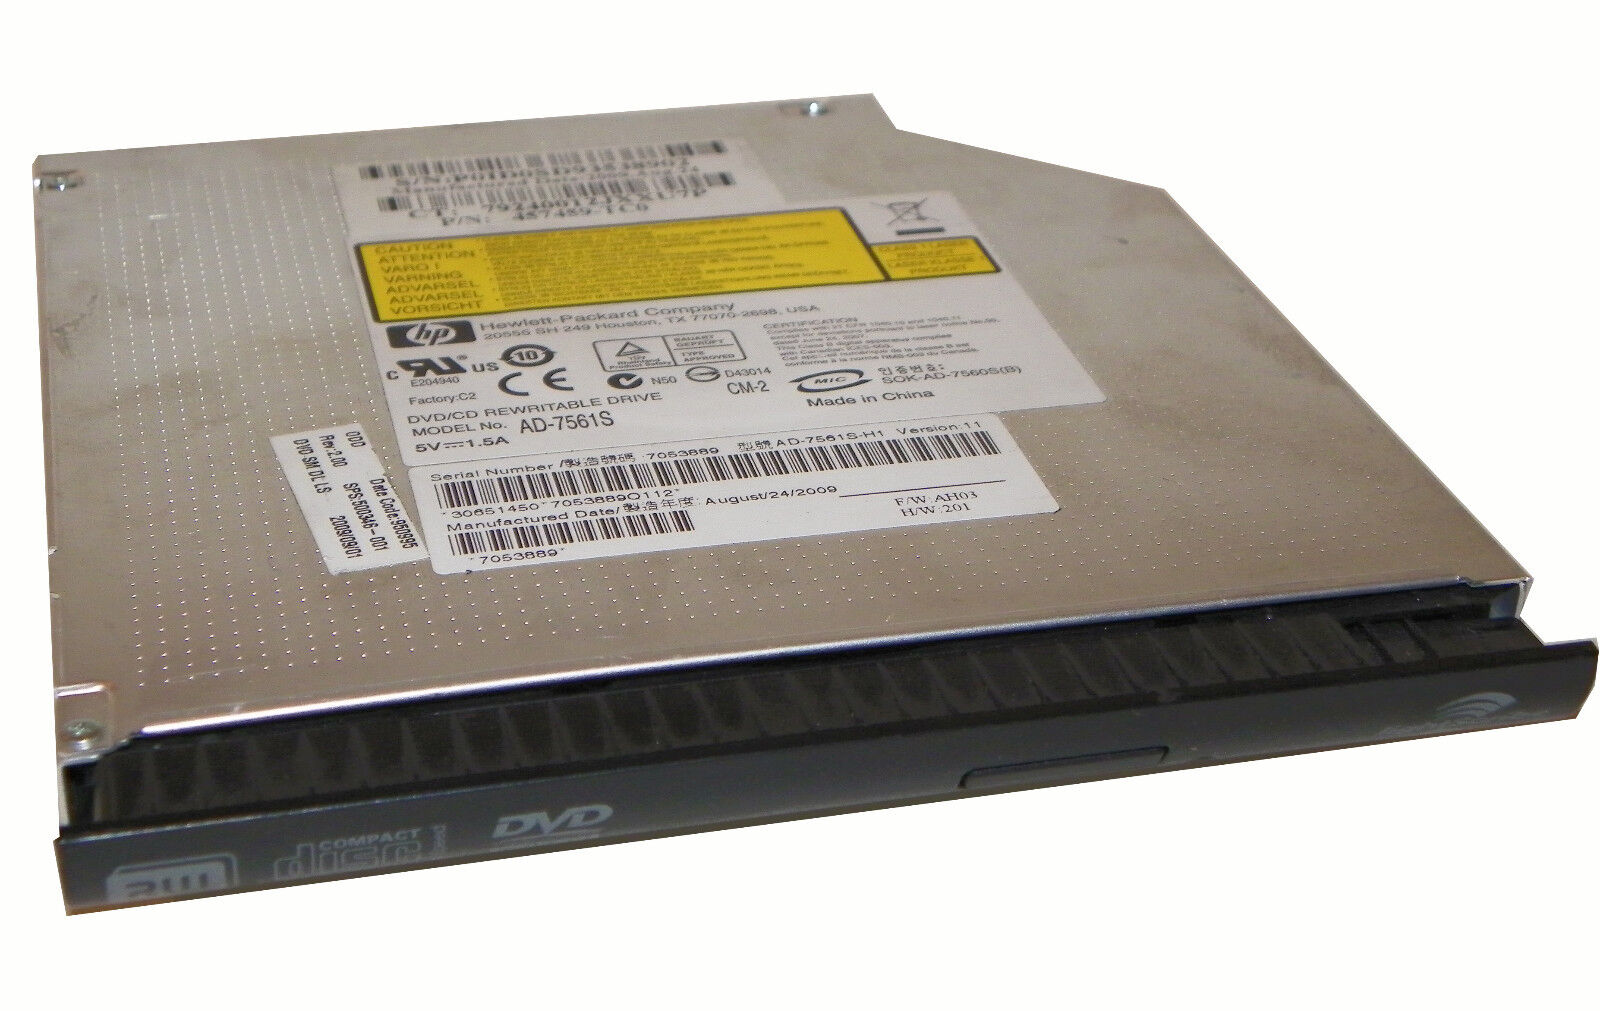 HP DVD+RW Burner Laptop SATA Drive AD-7561S Light-Scribe HP 500346-001